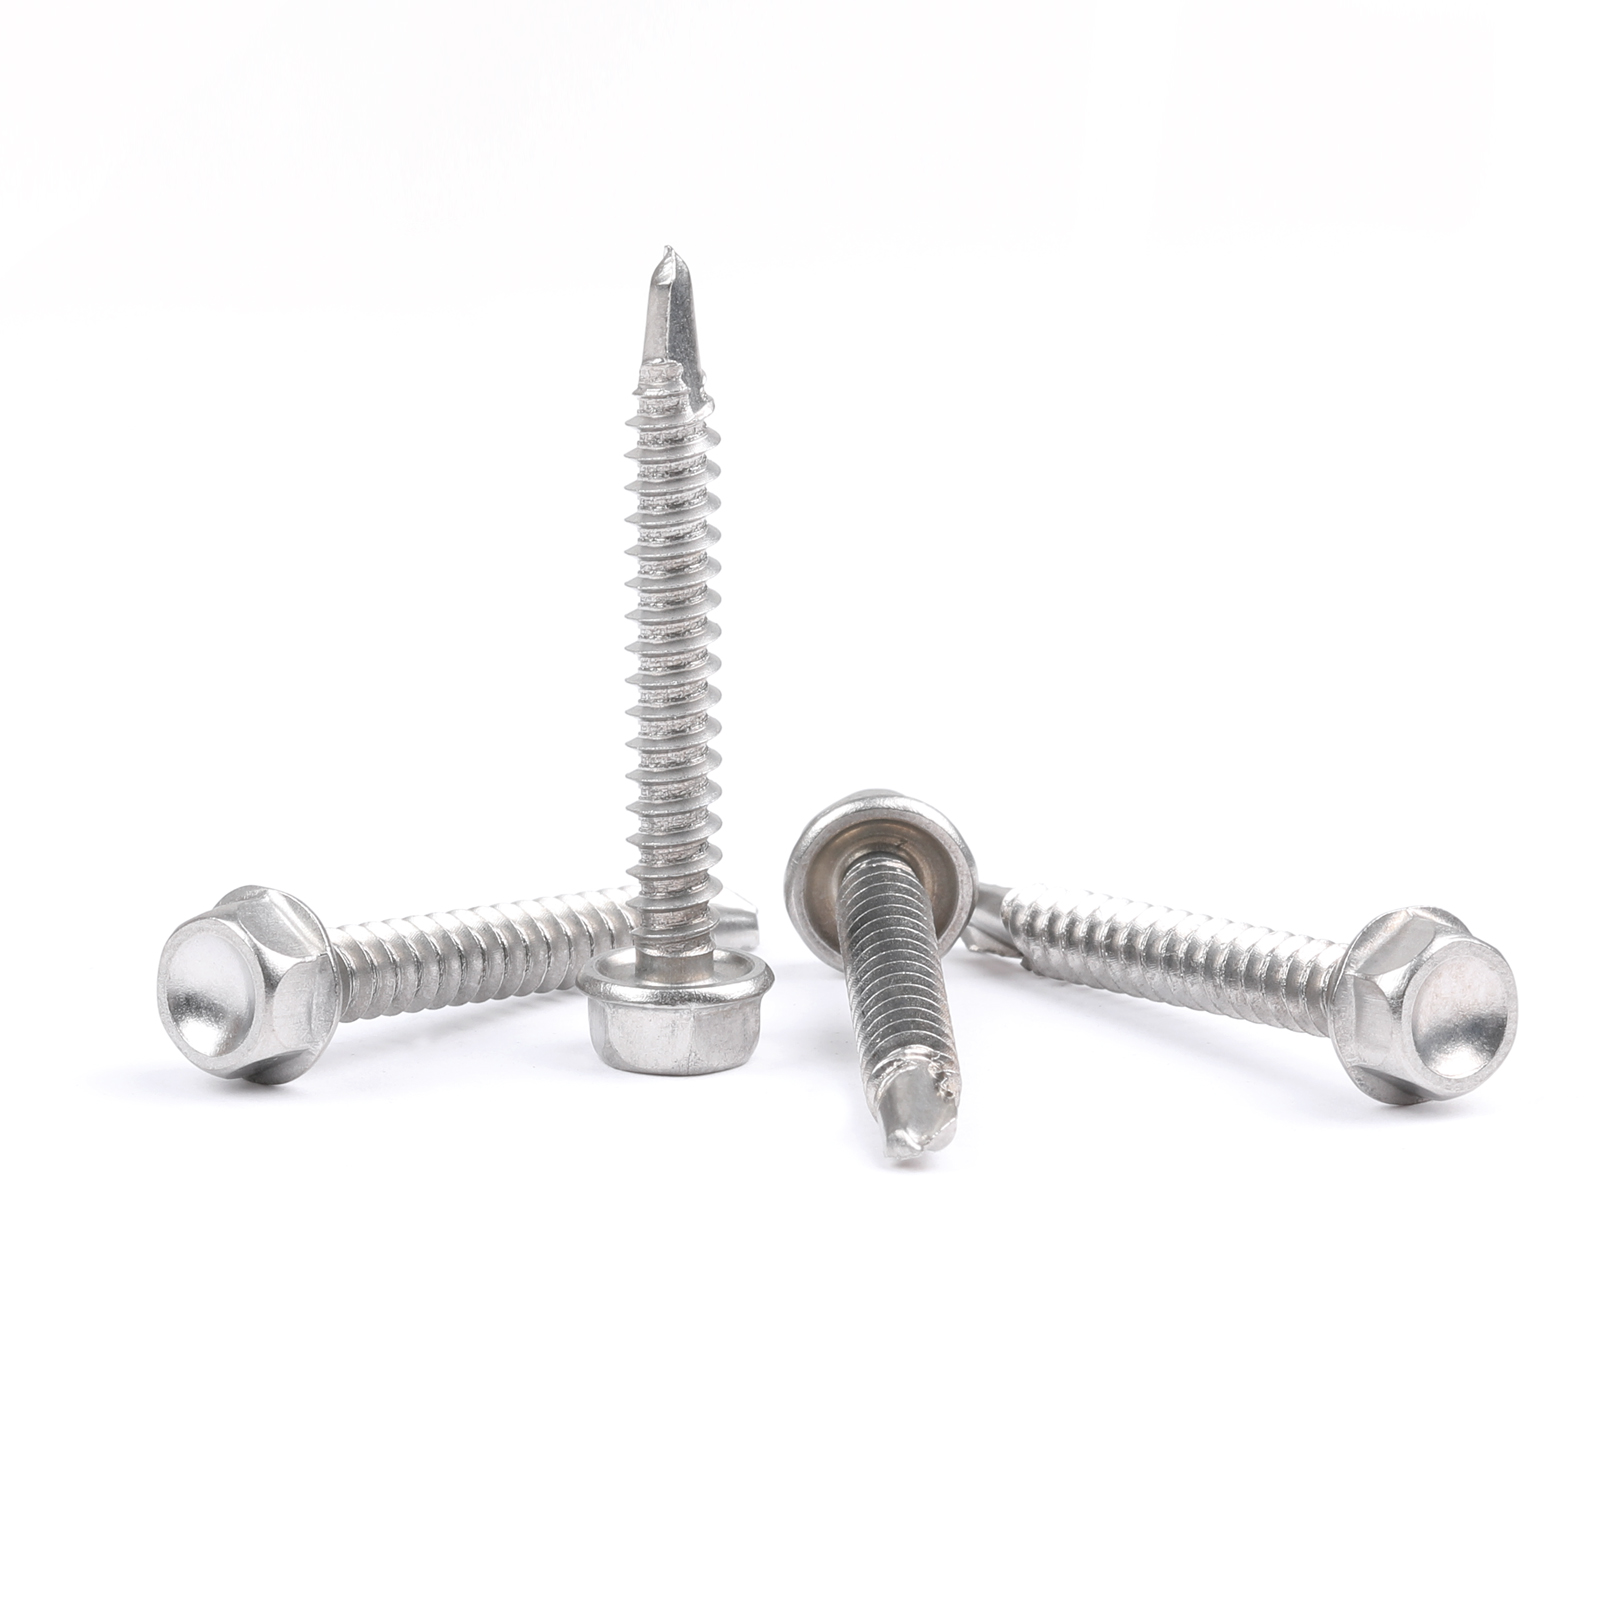 ZDI SUPPLIES (HAIYAN) CO., LTD. , Hexagon belt self-tapping and self-drilling screws